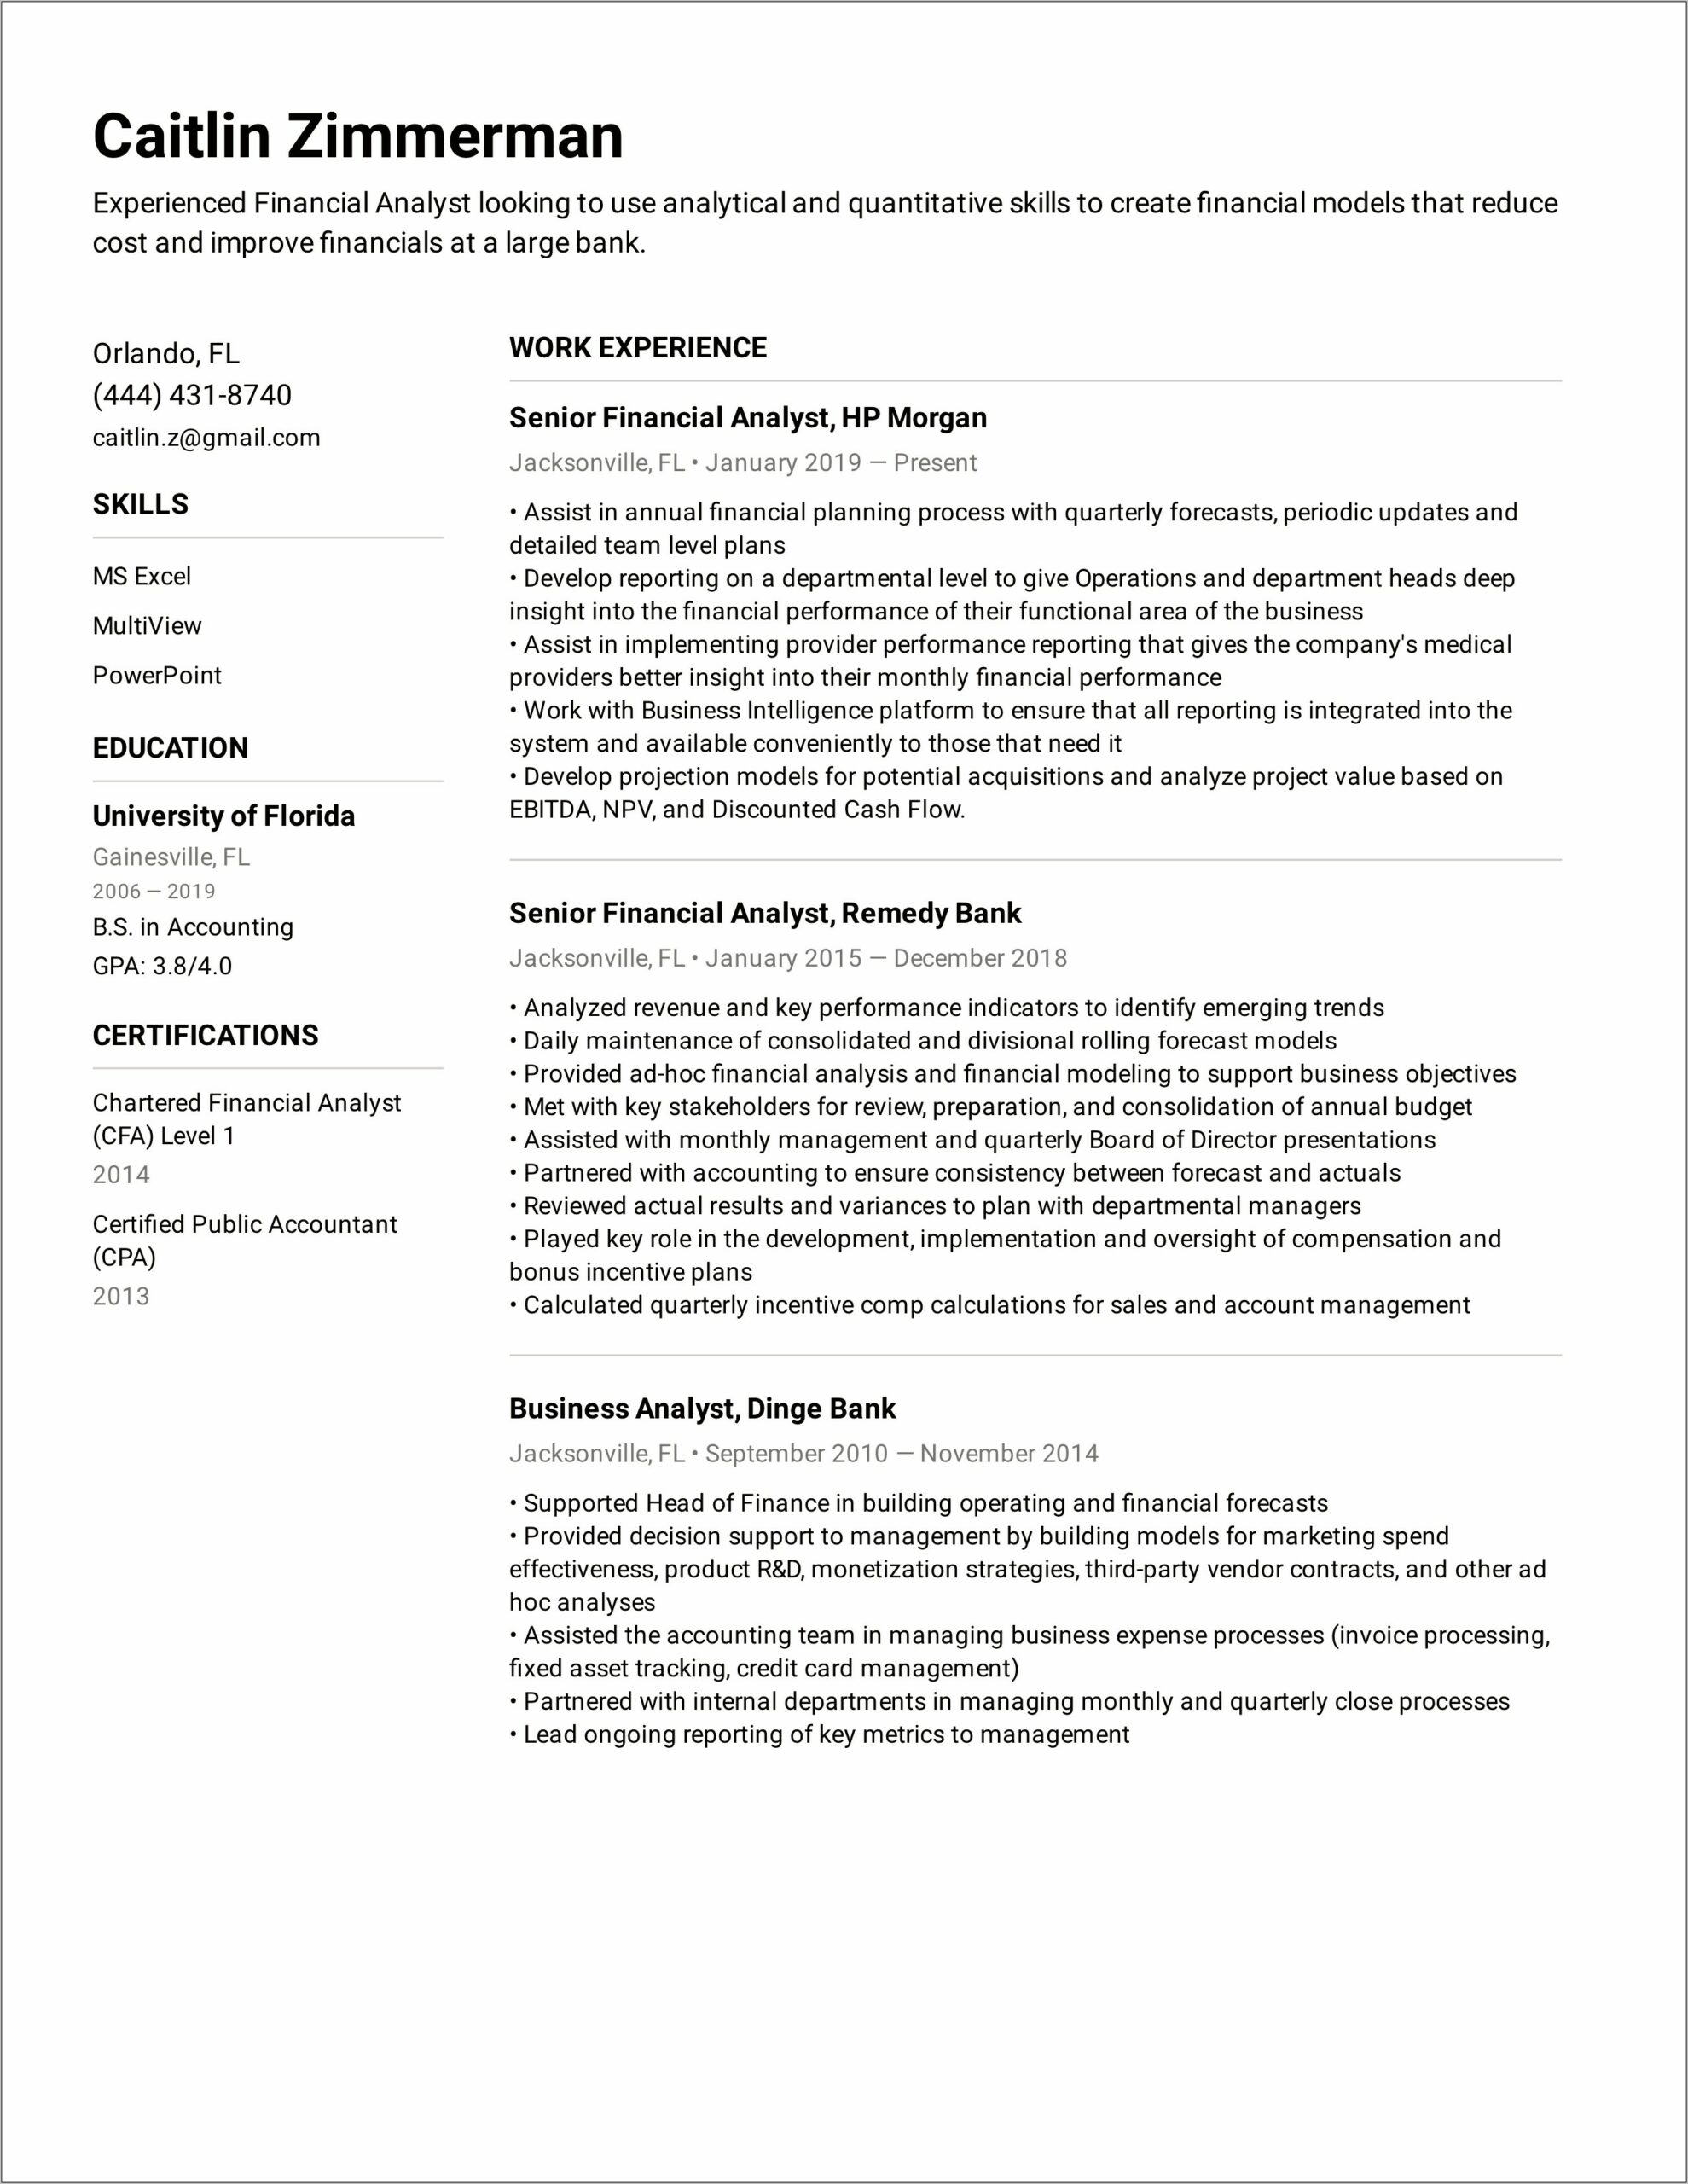 Pharmacy Technician Resume Job Description Reference